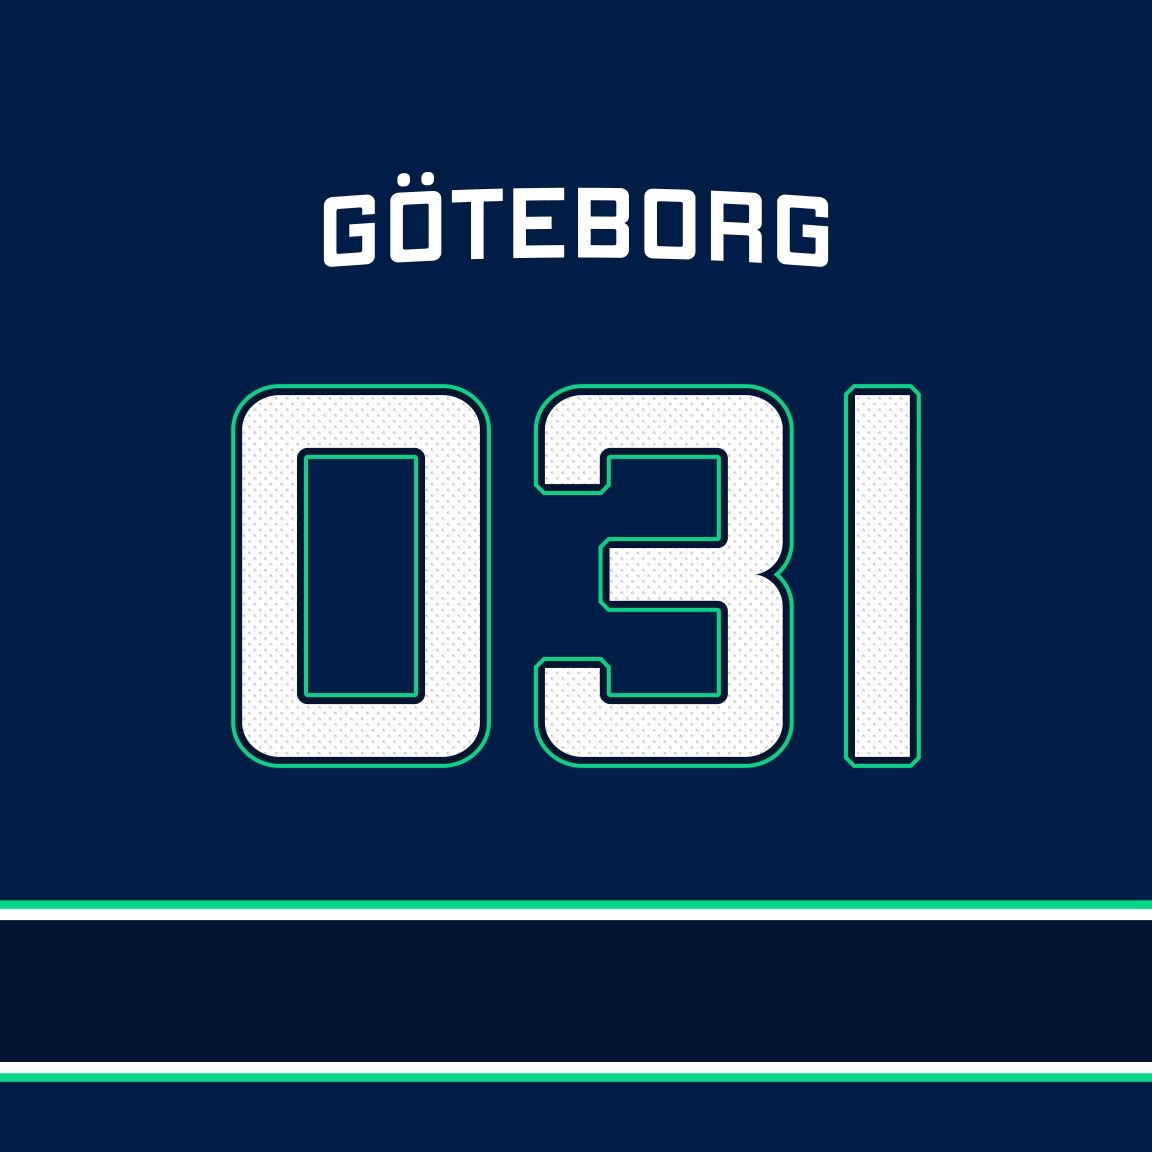 Team goteborg